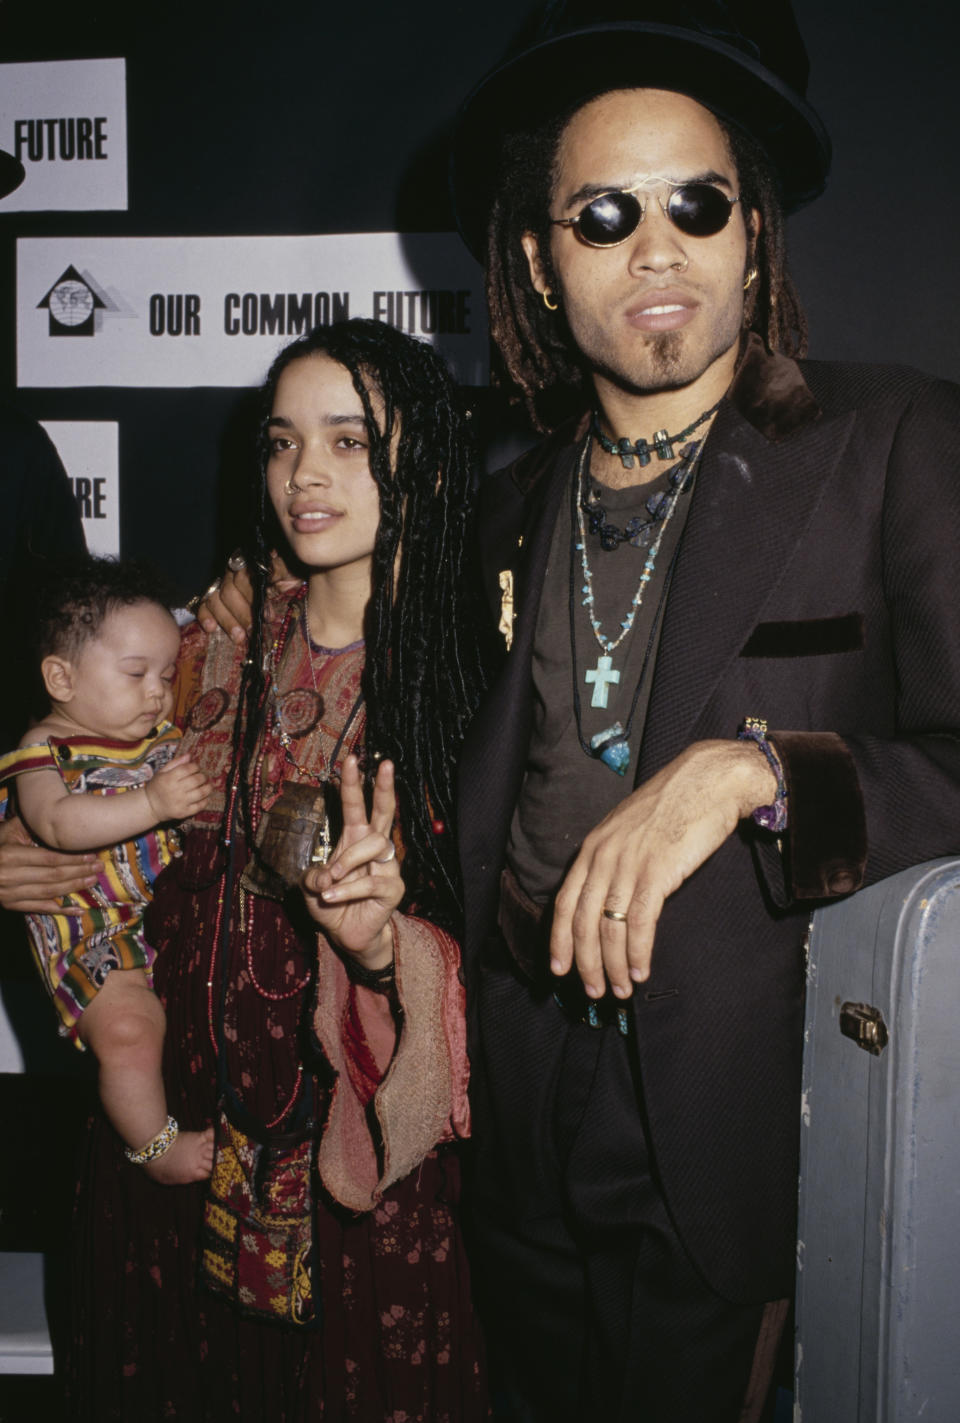 Lenny Kravitz with Lisa Bonet, who is holding a sleeping baby